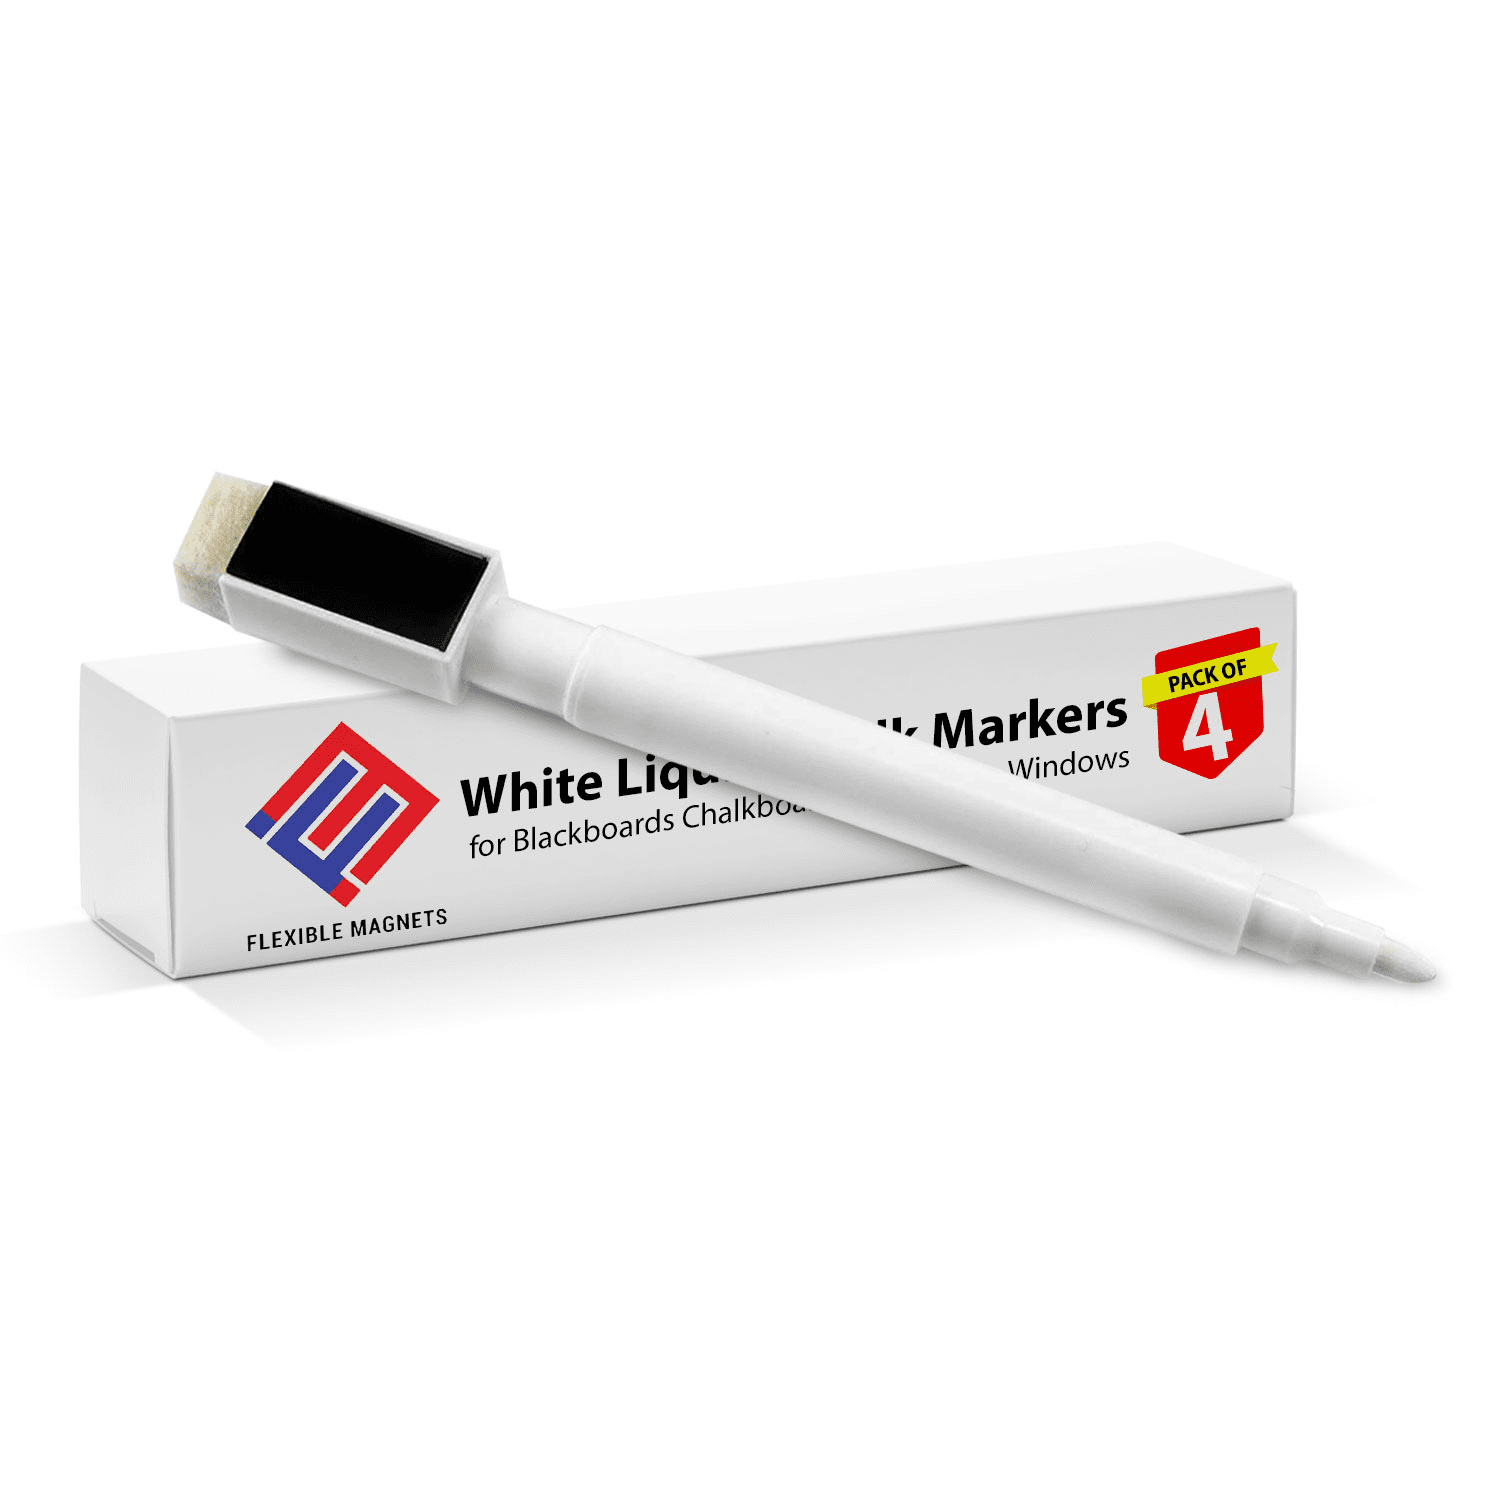 1 PC/5 PCS White Chalk Markers Chalk Pens - White Dry Erase Marker Pen for  Blackboard, Chalkboards, Windows, Glass, Bistro, Signs